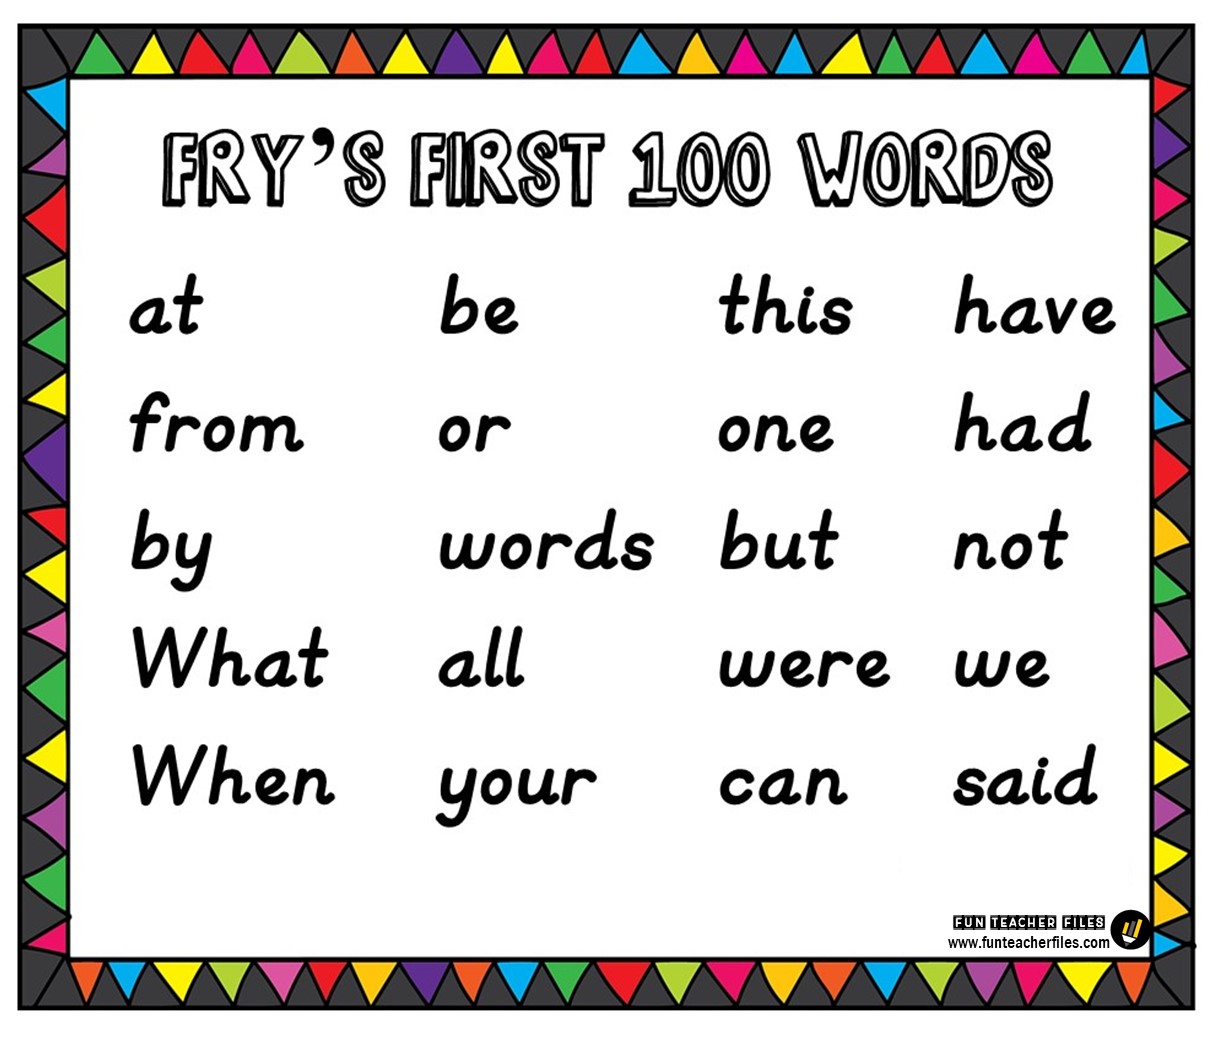 fry sight word list kindergarten